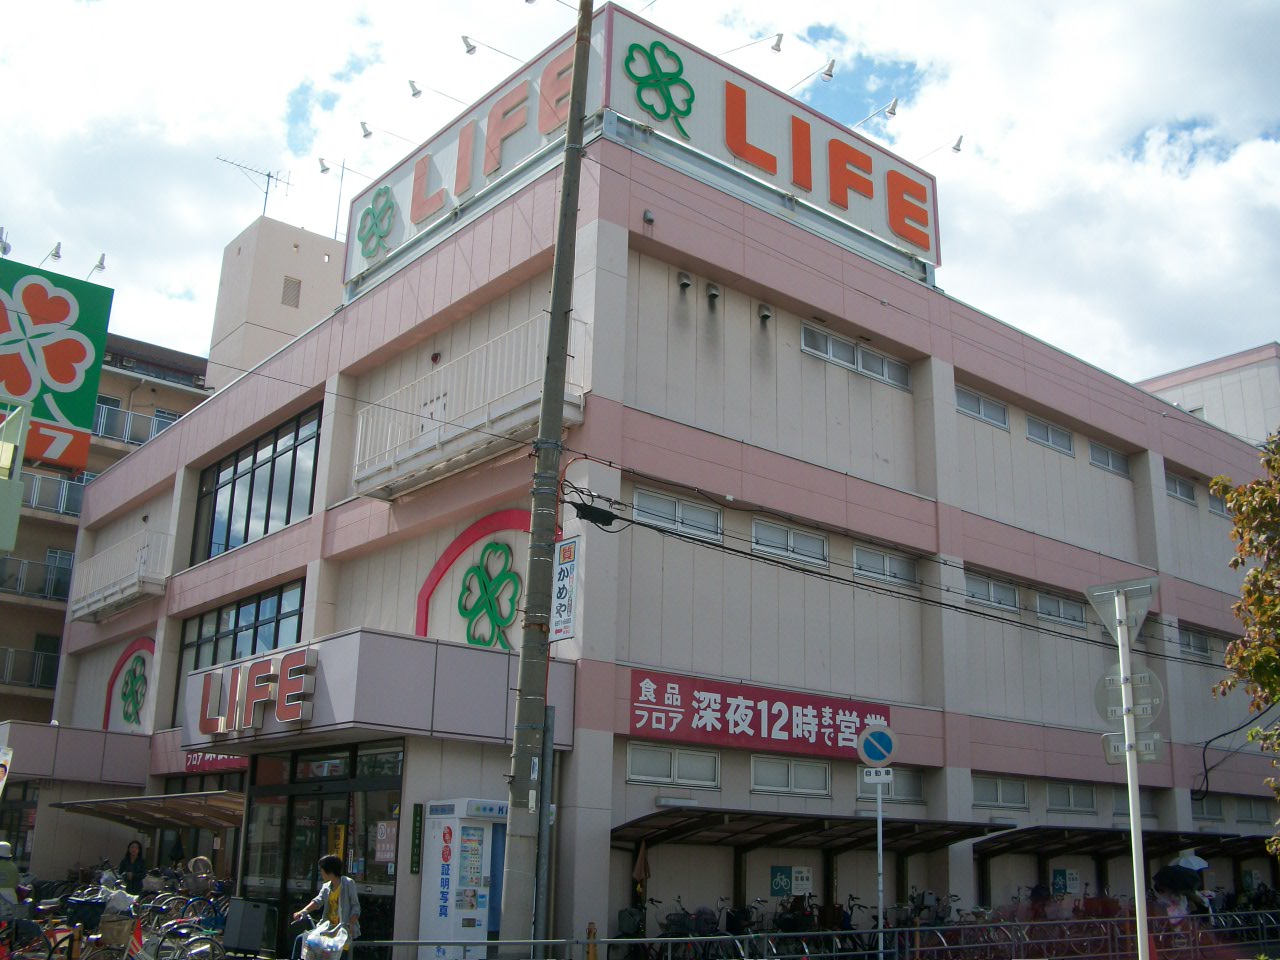 Supermarket. 305m up to life Fukaebashi store (Super)